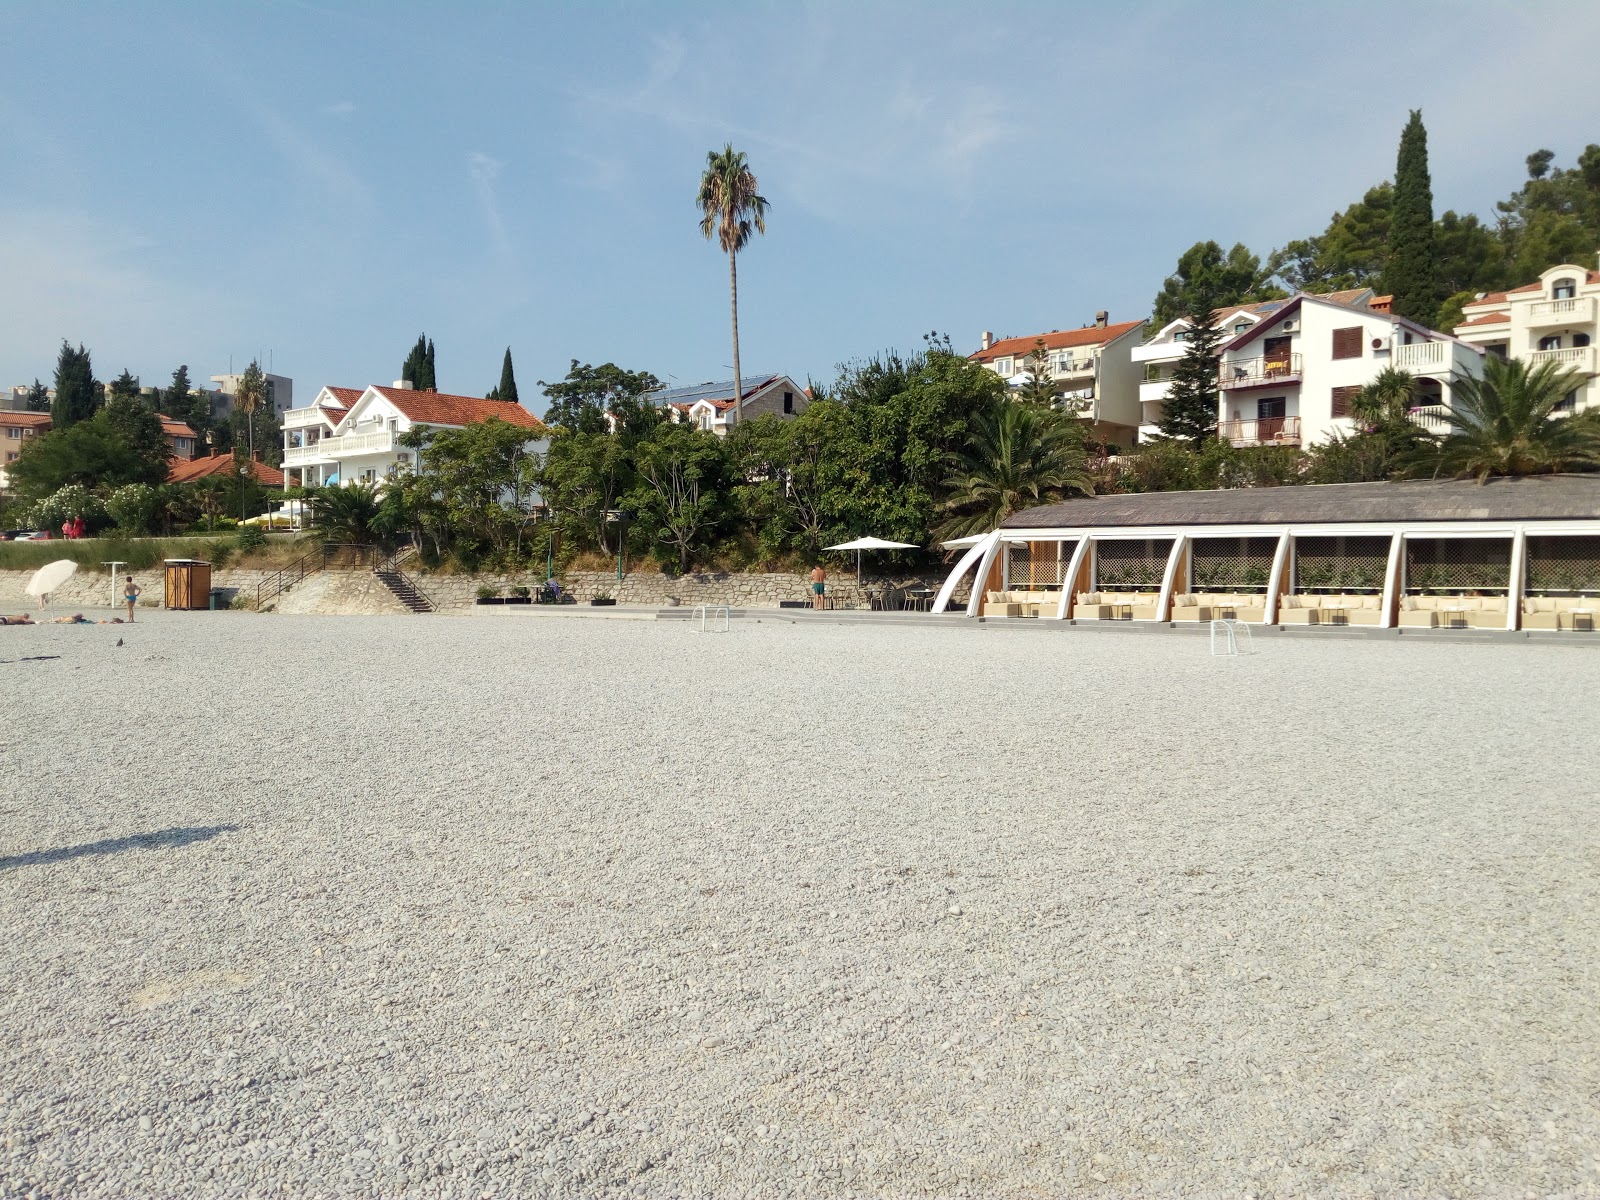 Fotografija Lazure beach z turkizna čista voda površino